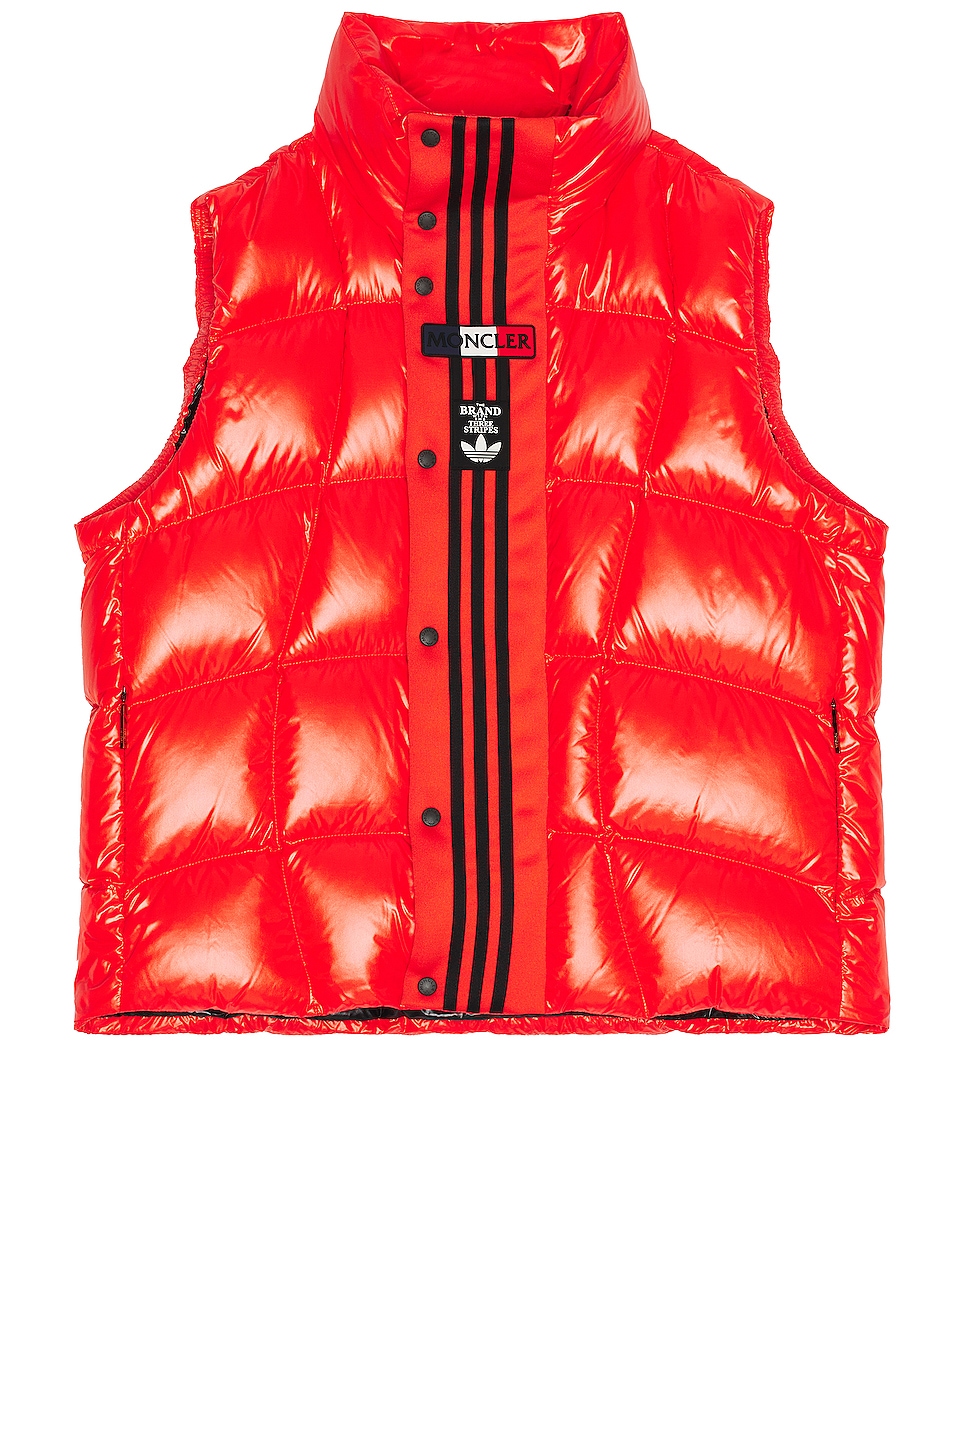 Image 1 of Moncler Genius x Adidas Bozon Vest in Red